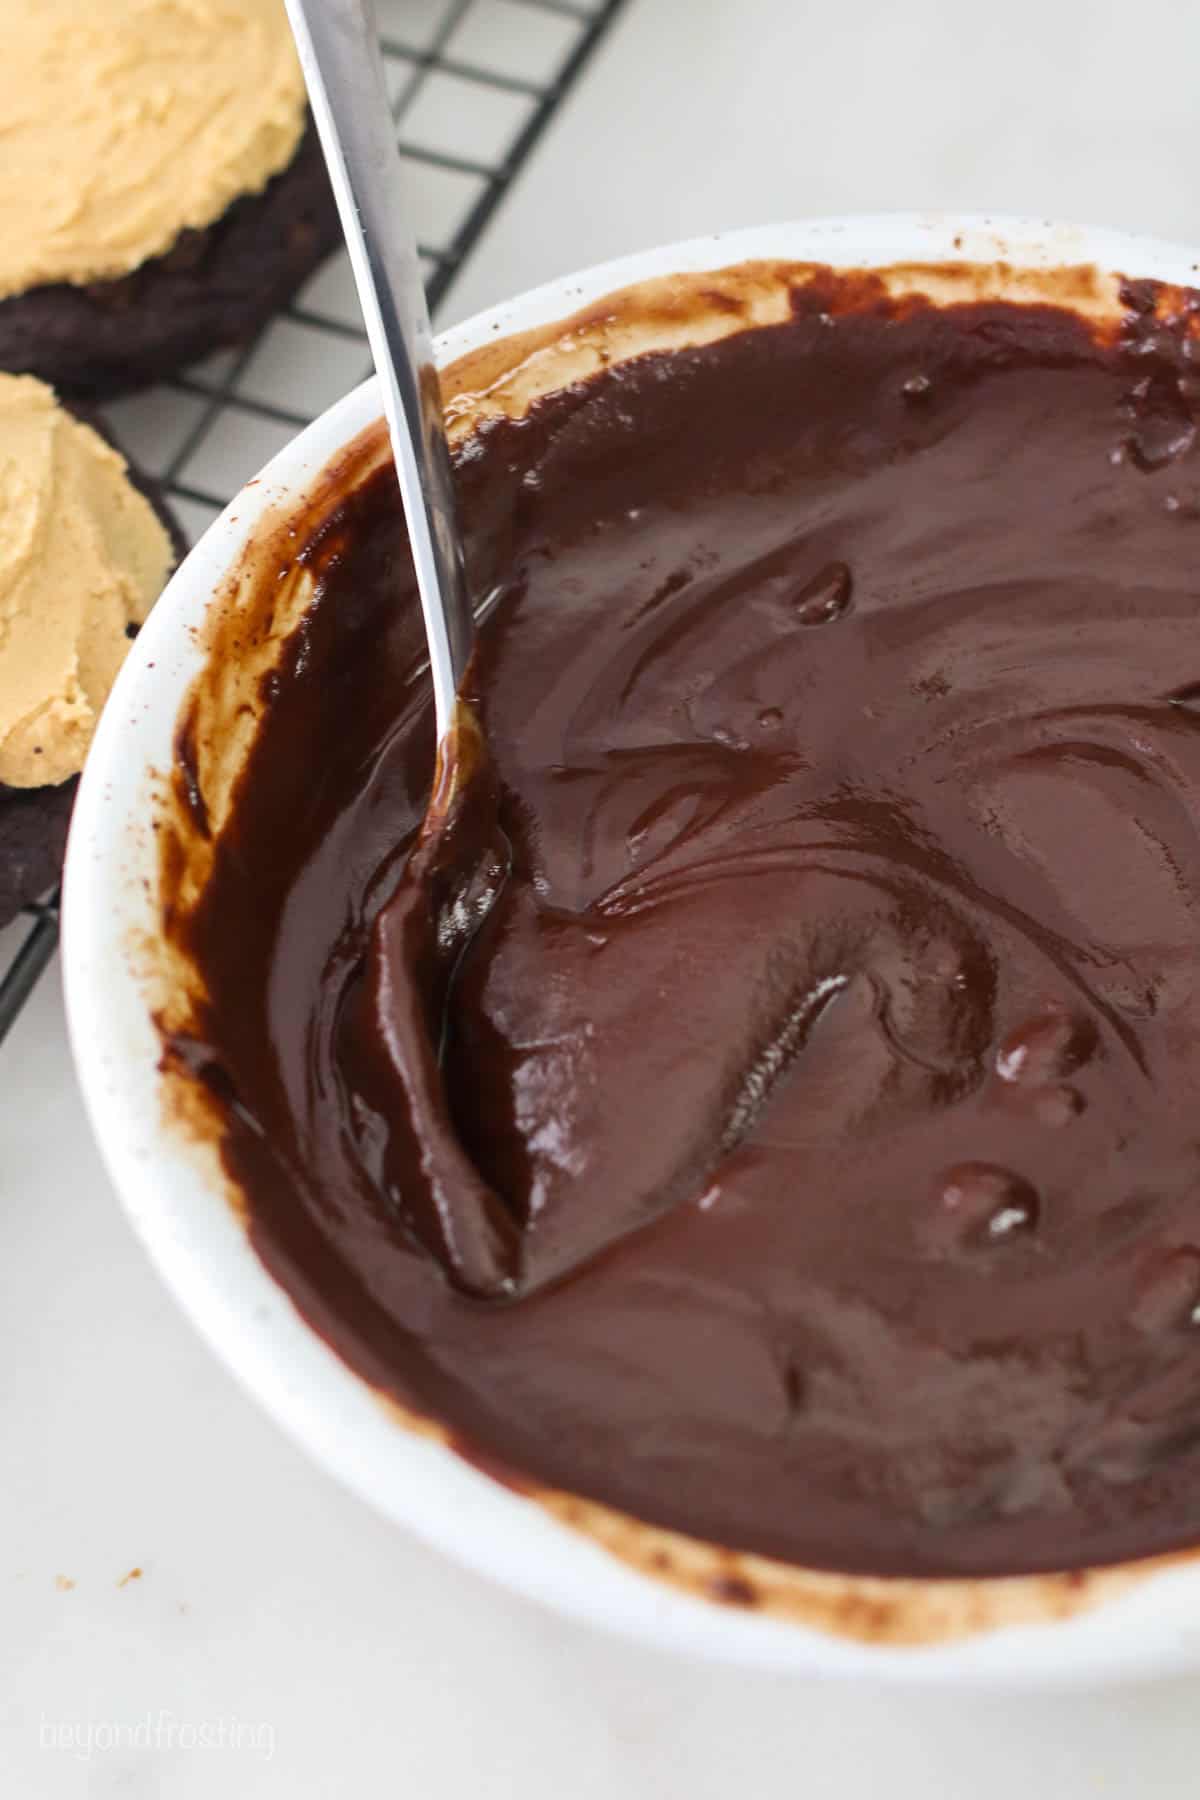 A metal spoon stirring chocolate ganache in a white bowl